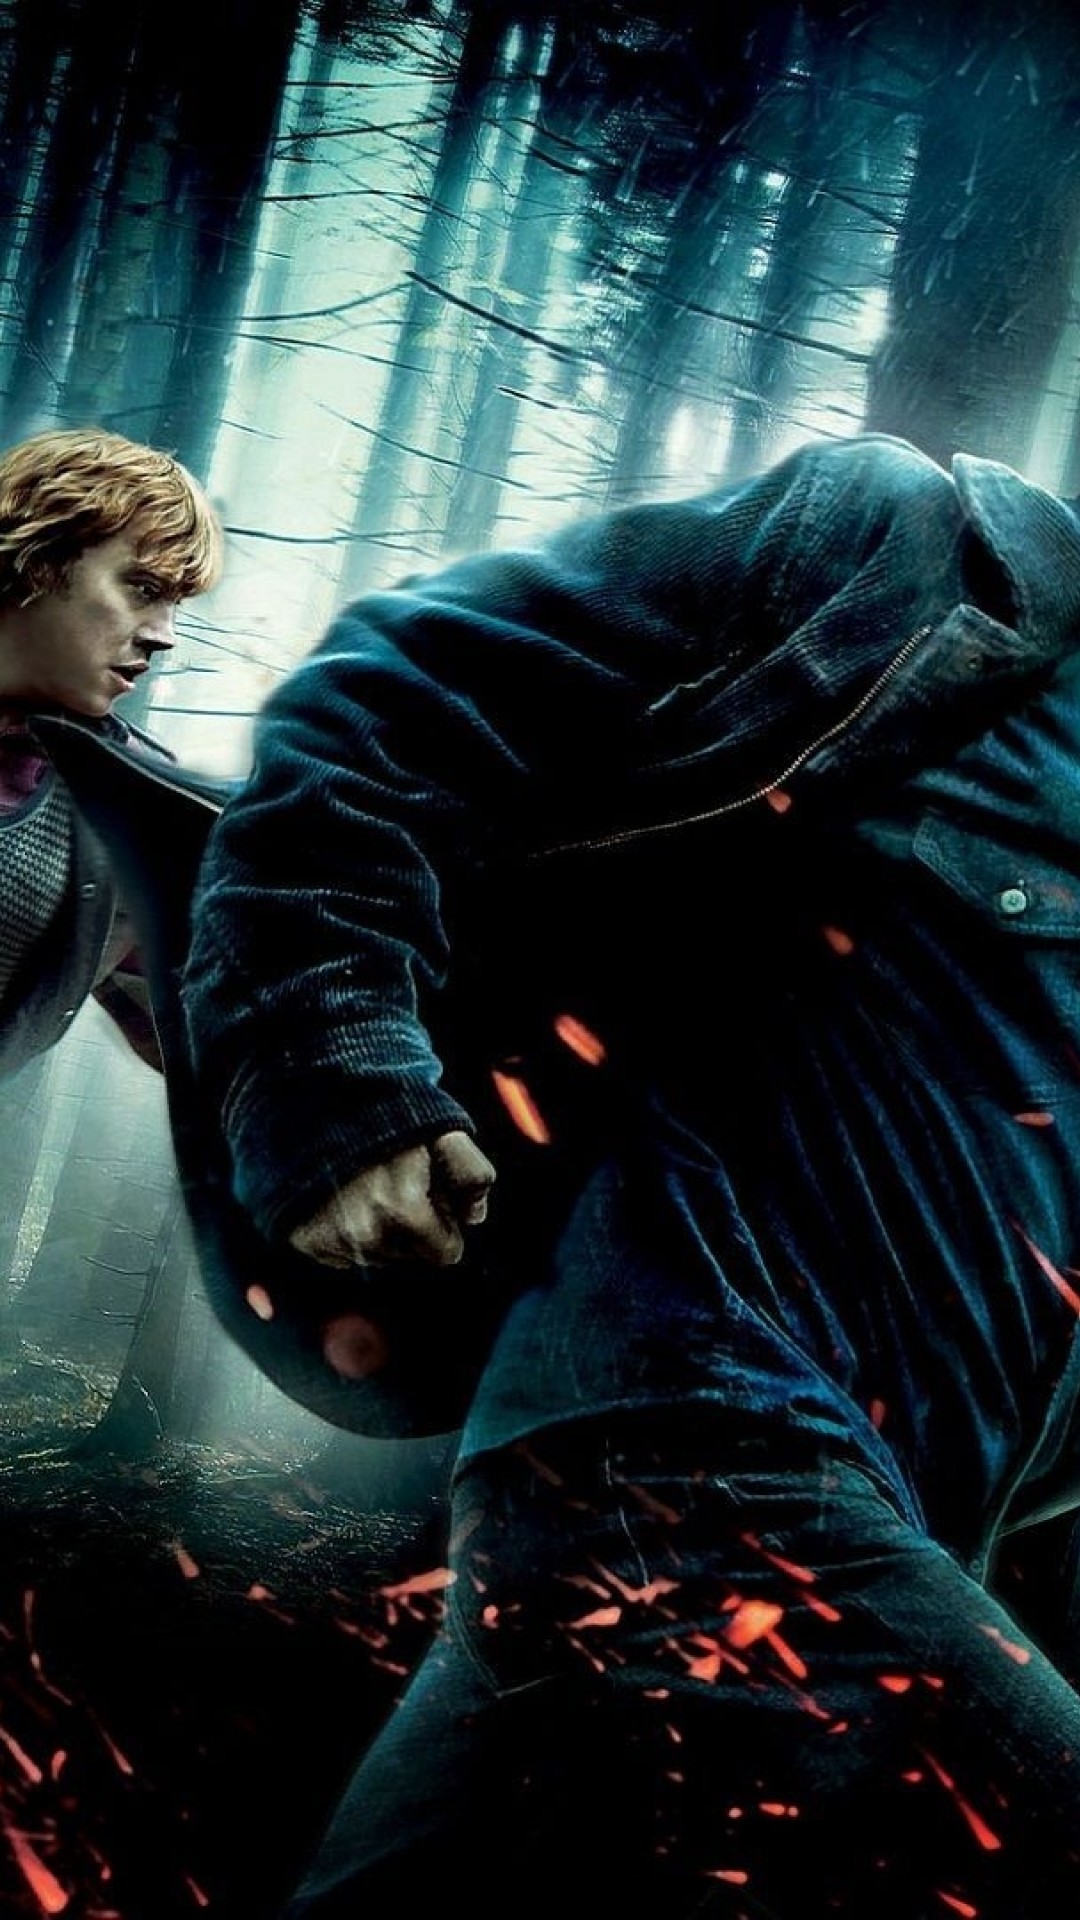 Harry Potter Movie Wallpaper for Desktop and Mobiles